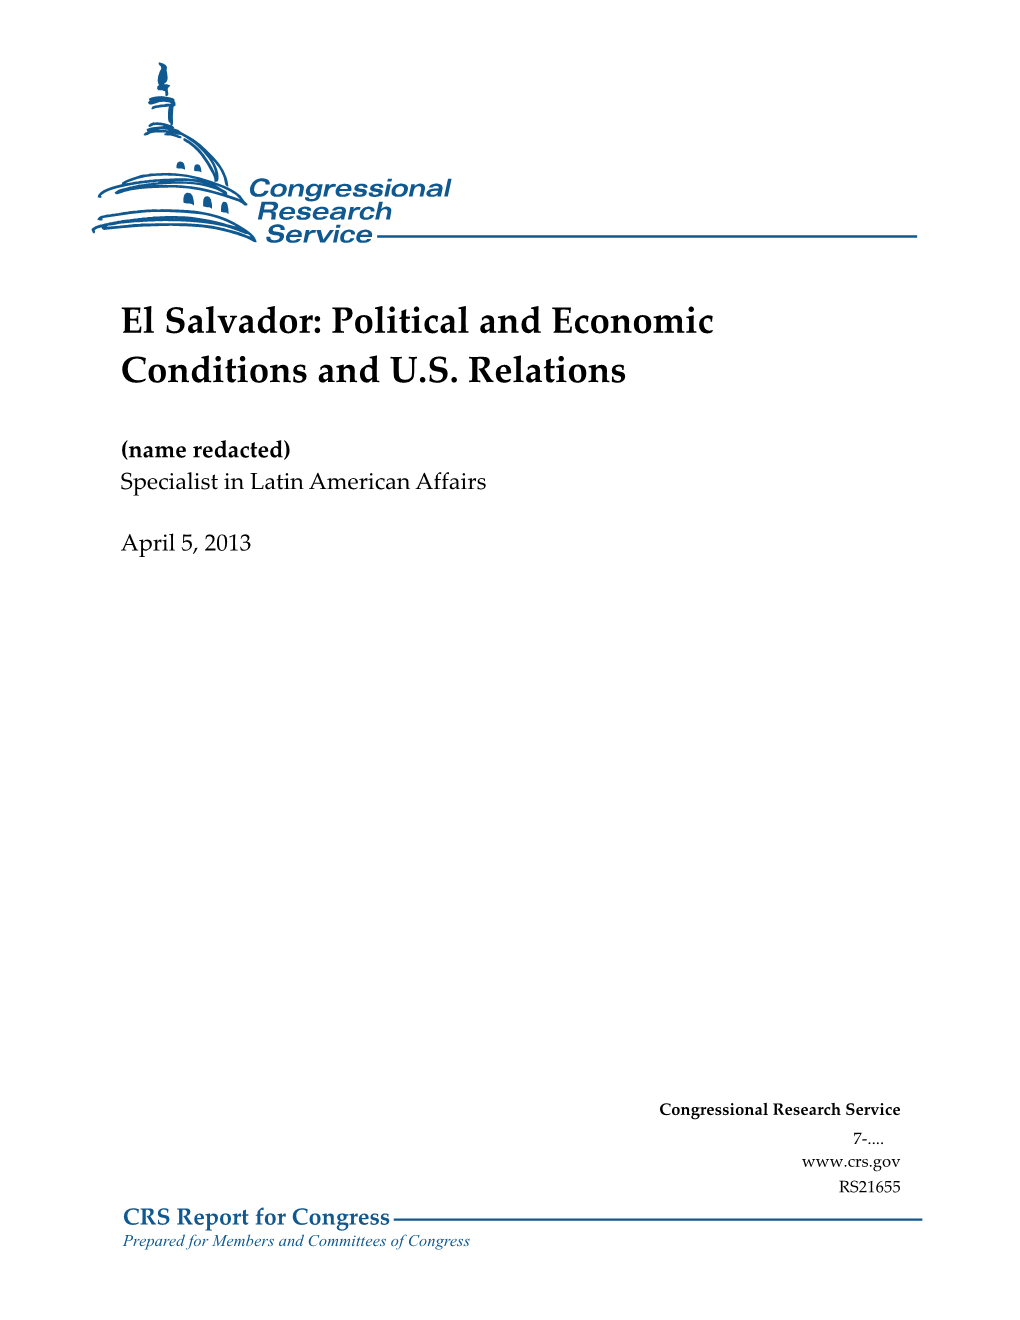 El Salvador: Political and Economic Conditions and U.S